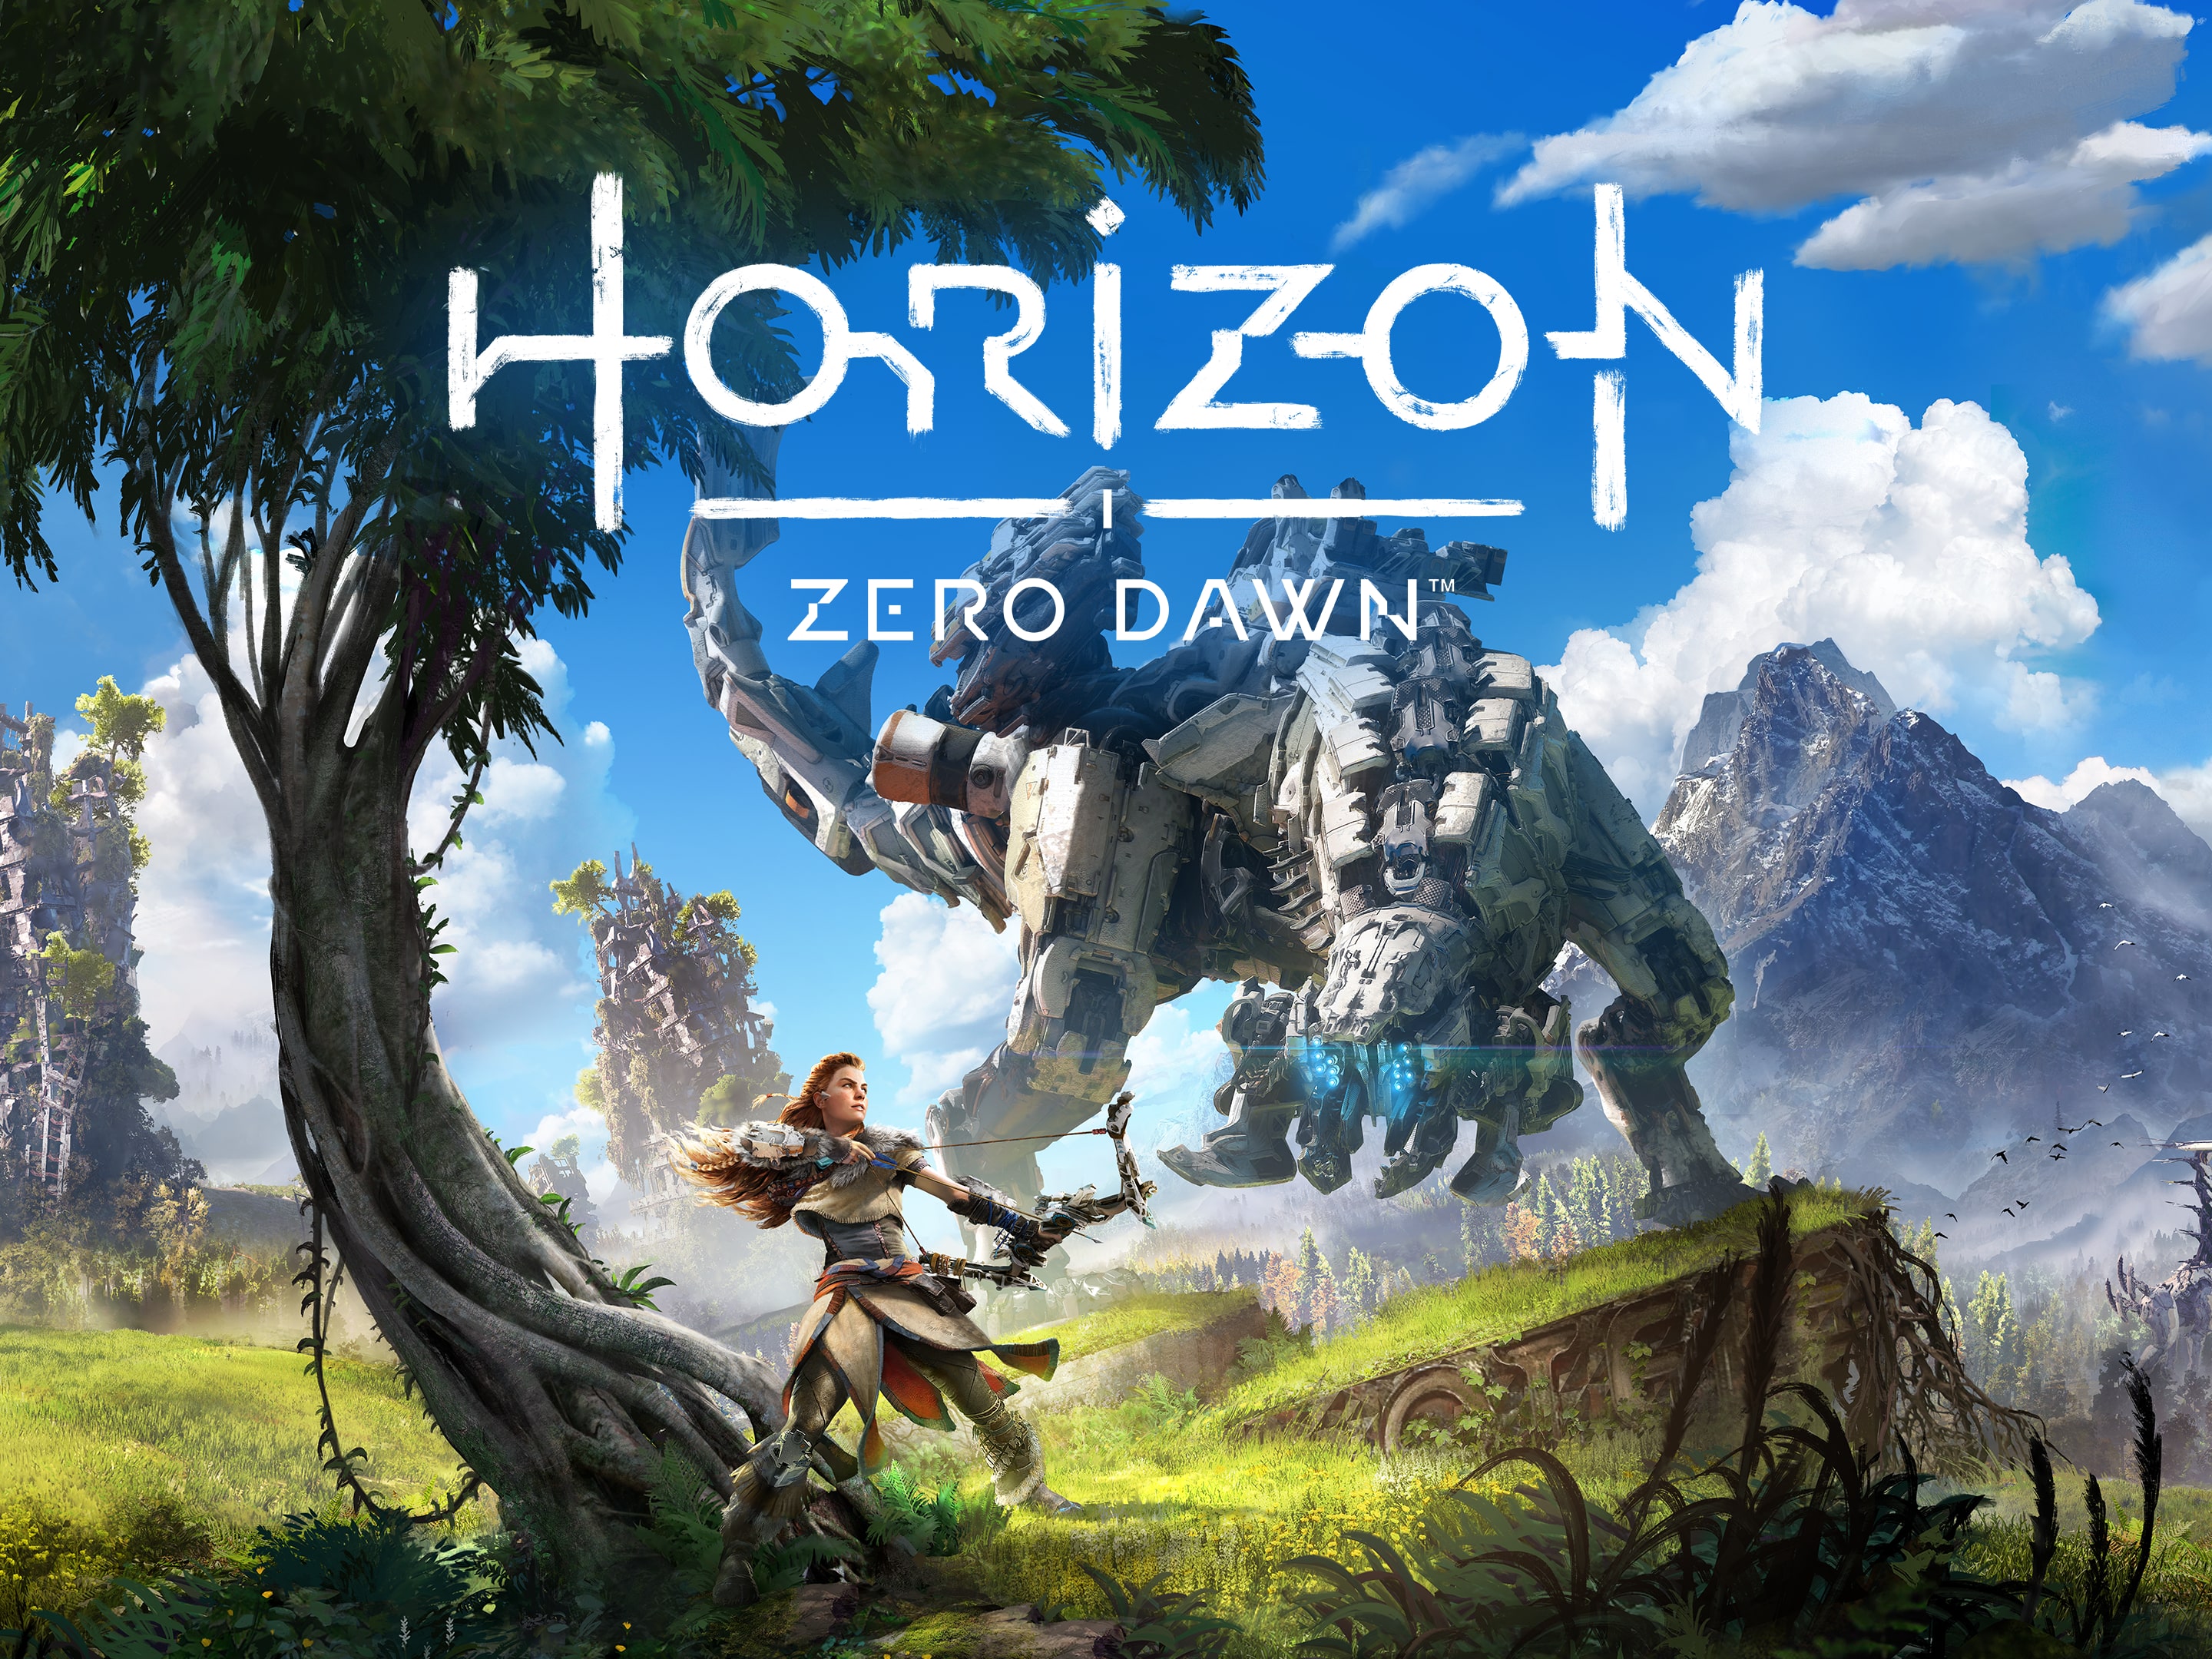 Jogo Horizon Zero Dawn (Complete Edition) - PS4 - curitiba - playstation  curitiba - Brasil Games - Console PS5 - Jogos para PS4 - Jogos para Xbox  One - Jogos par Nintendo Switch - Cartões PSN - PC Gamer